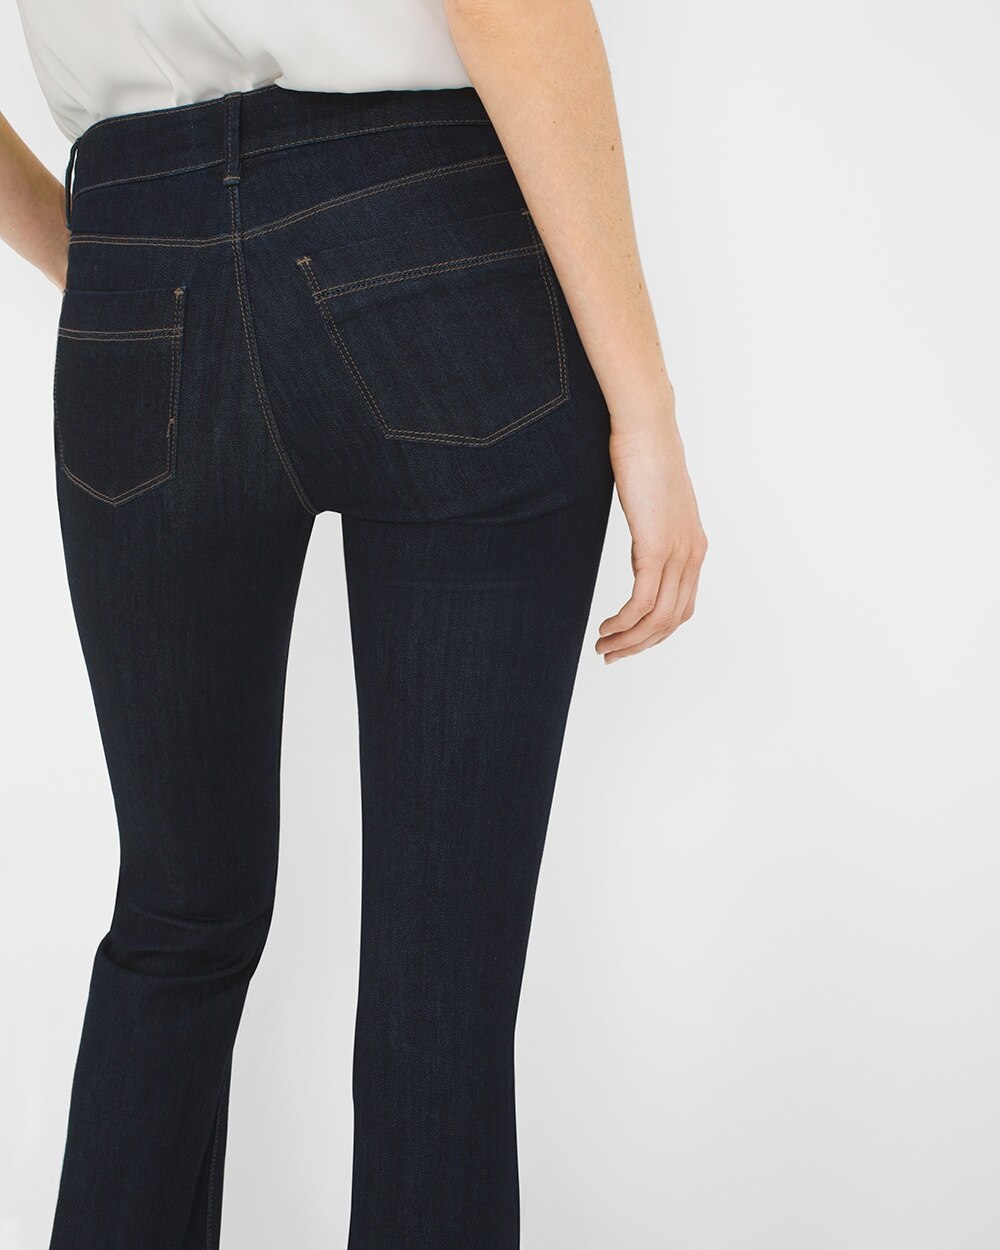 Skinny Flare Jeans - White House Black Market